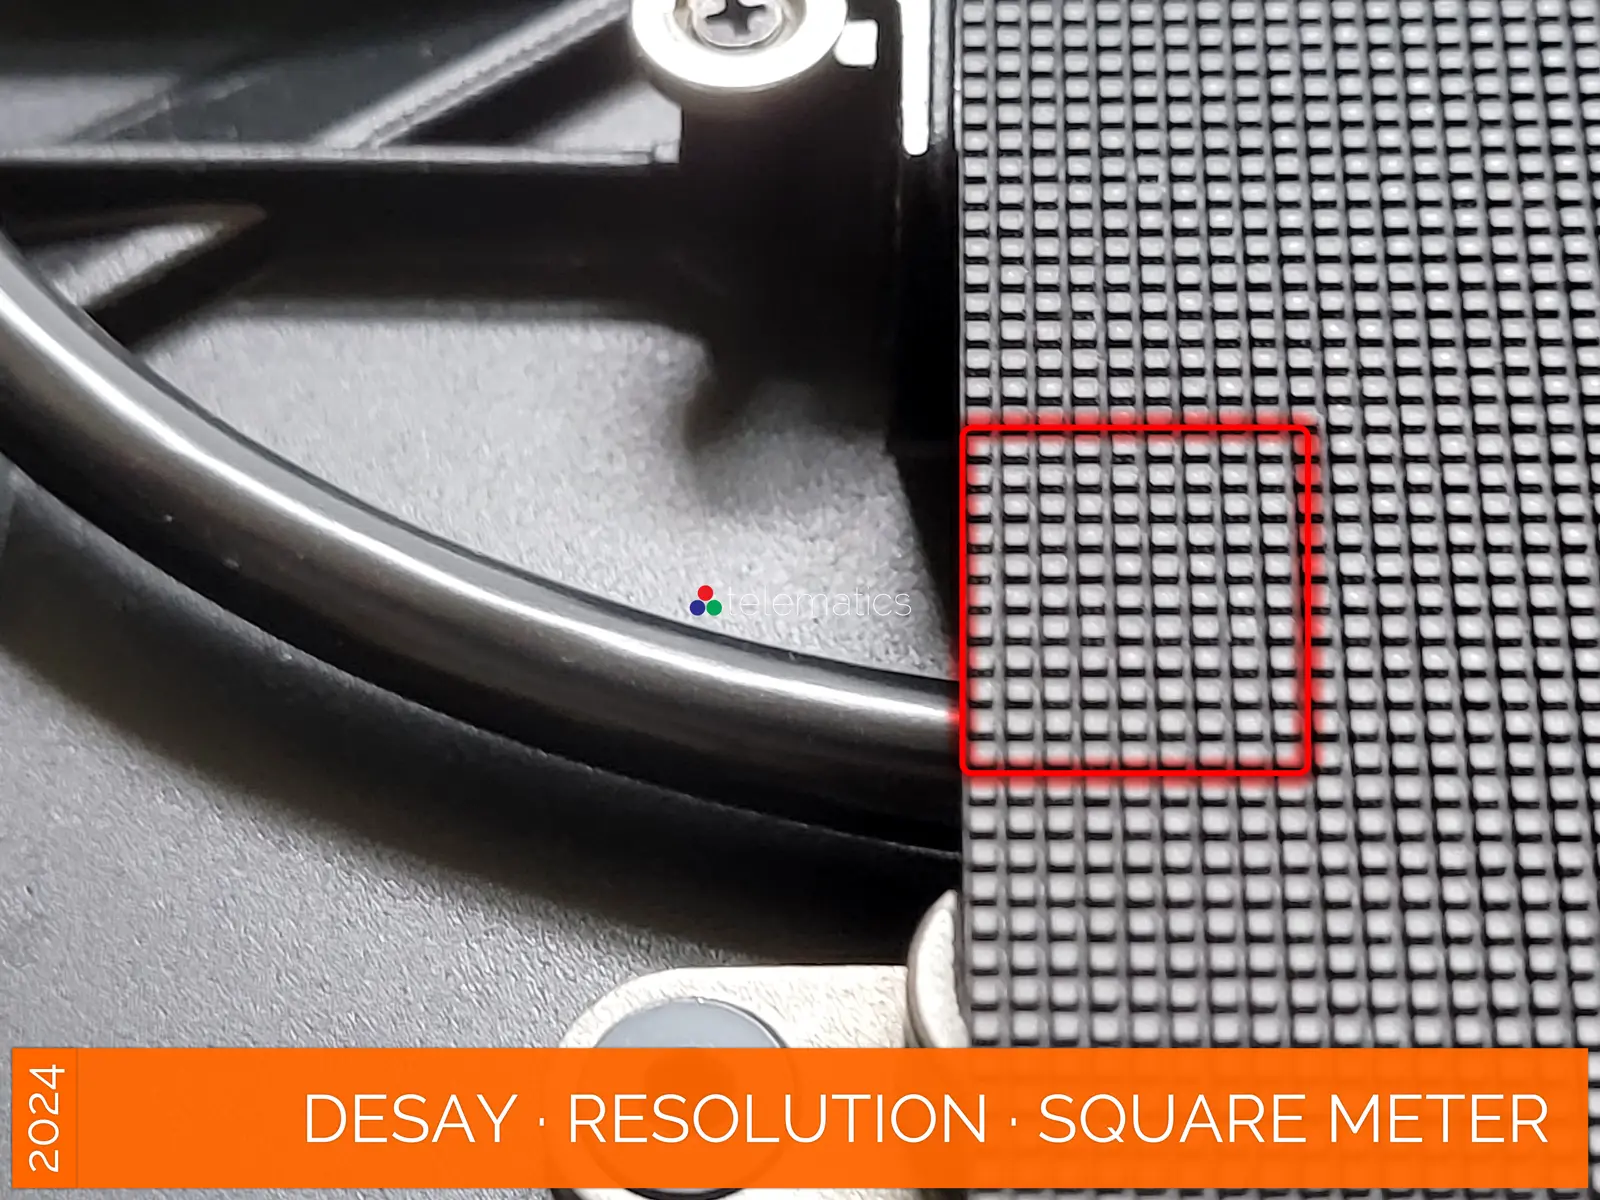 Desay · Series · Direct View LED Display Panel · Full Pixel Range · Resolution · Pixels · Square Meter · NovaStar COEX MX CX · Vision Management Platform · Viplex · review · price · cost